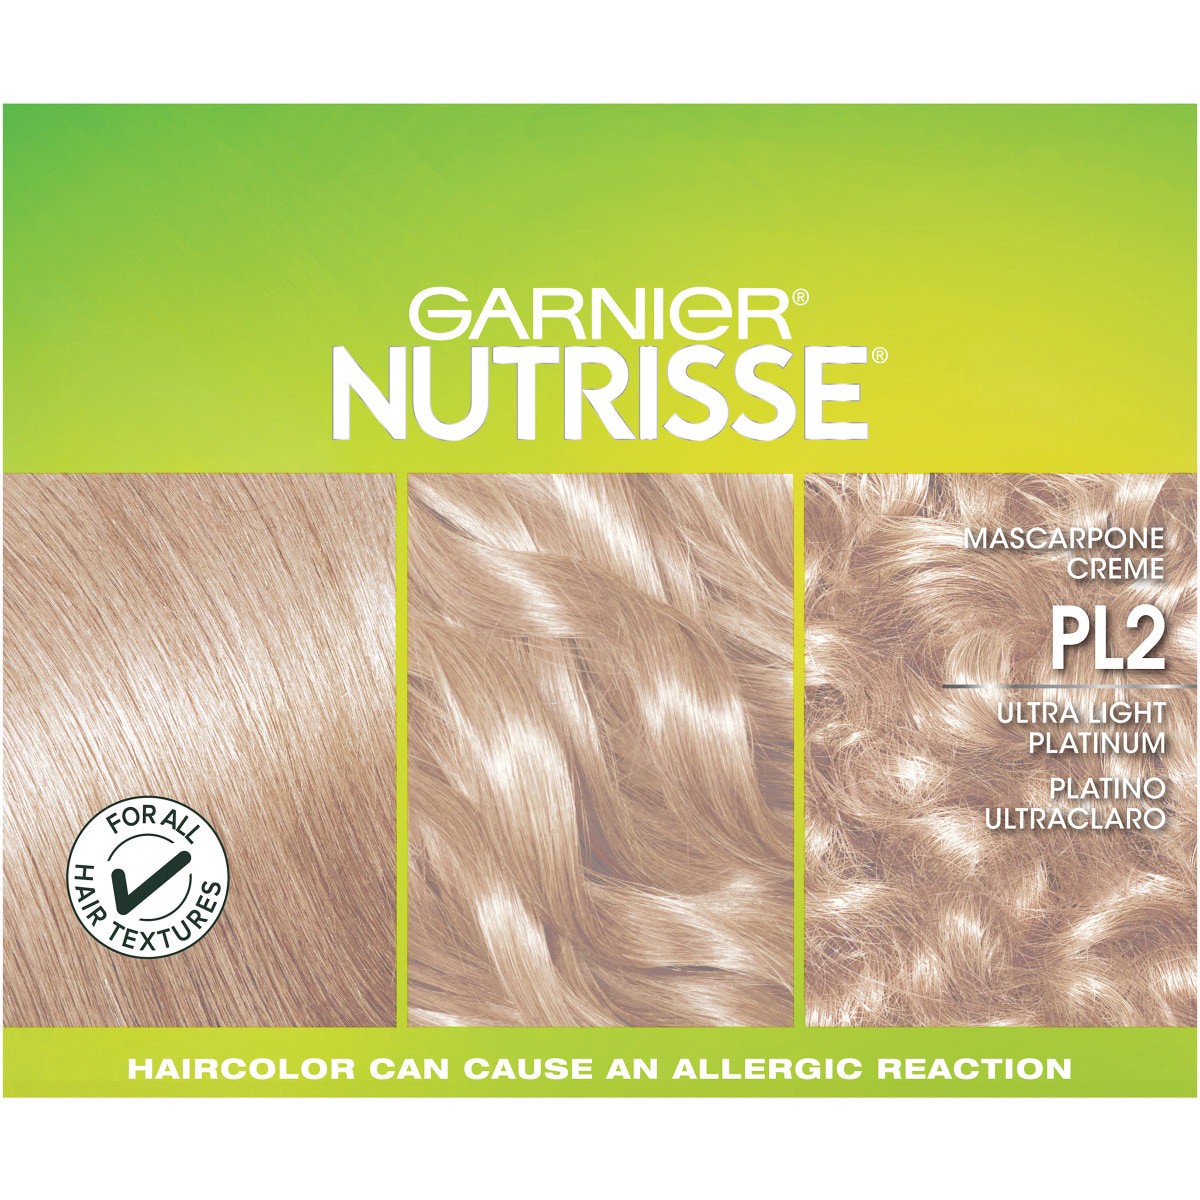 slide 12 of 21, Garnier Ultra Color Nourishing Hair Color Creme, Mascarpone Creme Kit, 1 ct